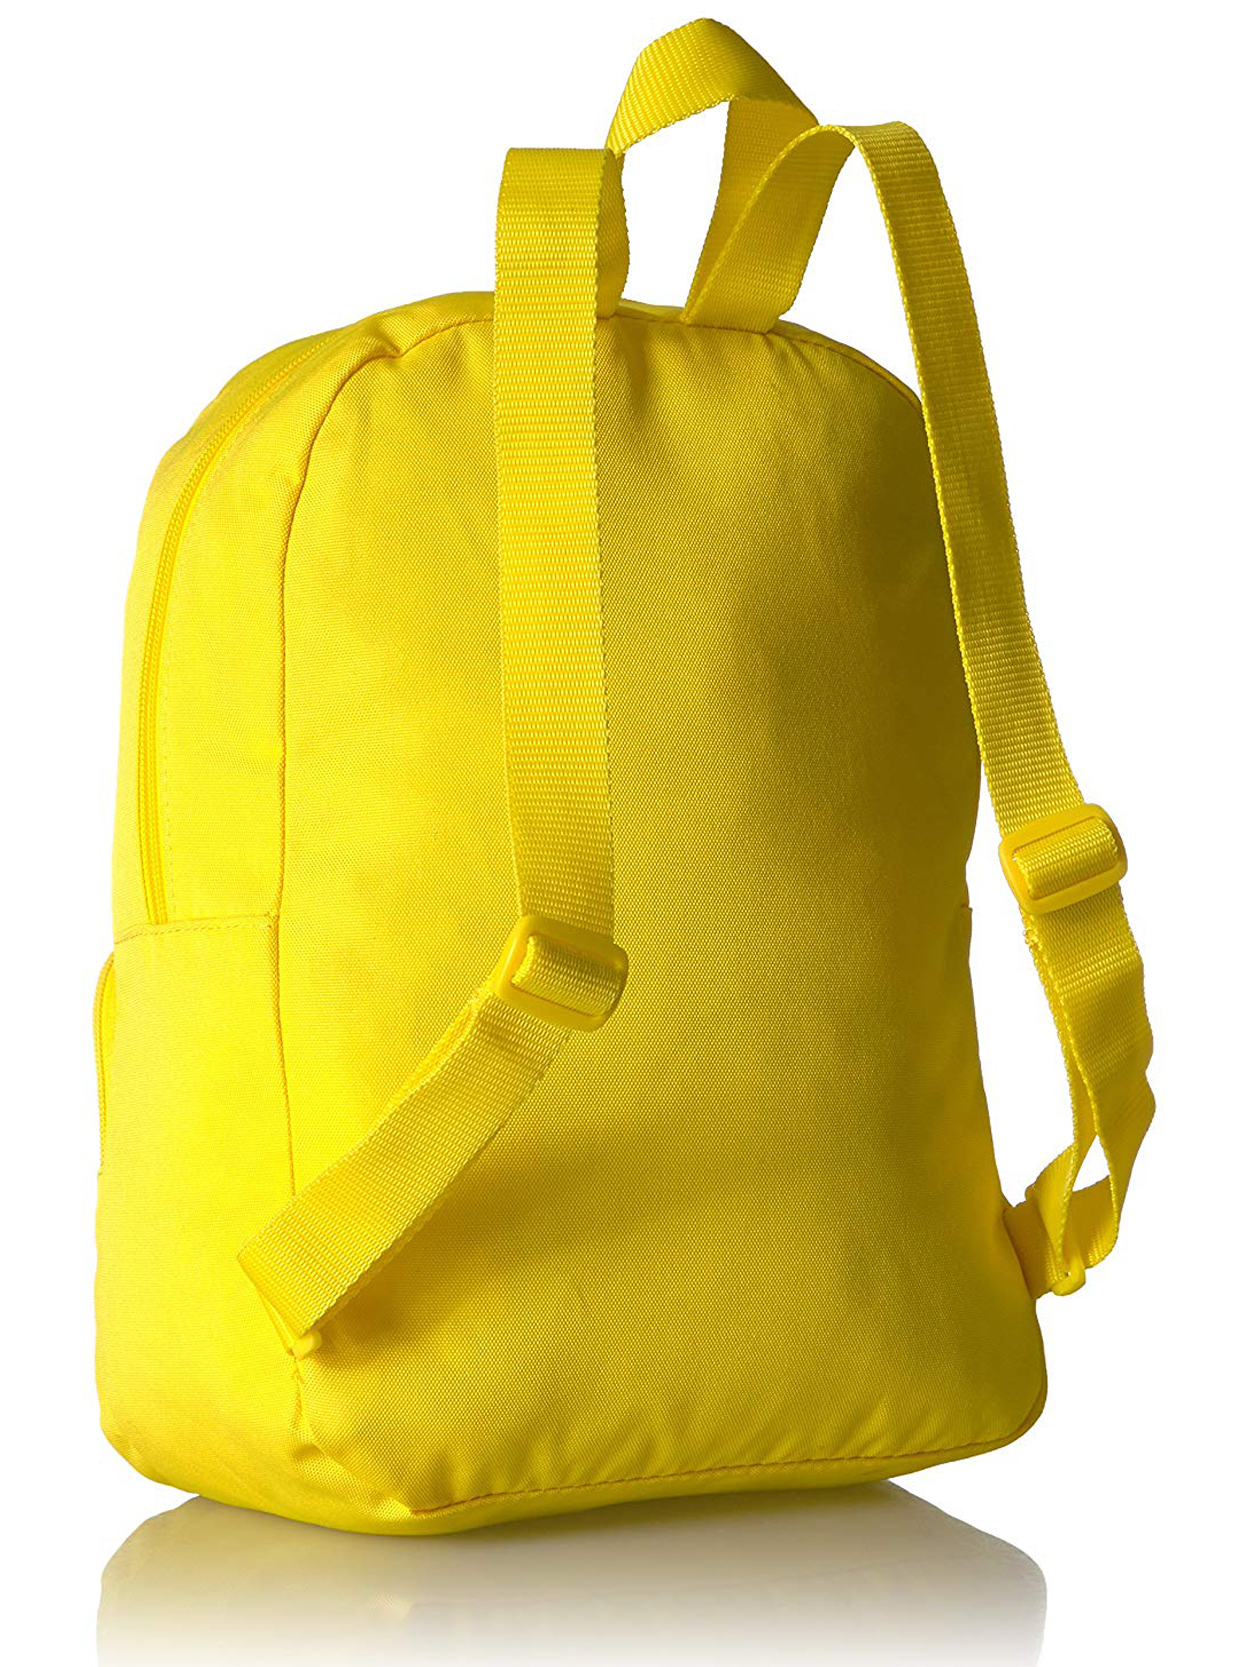 John Deere Chick Toddler 13 inch Yellow Mini Backpack JFL869YT - image 3 of 5